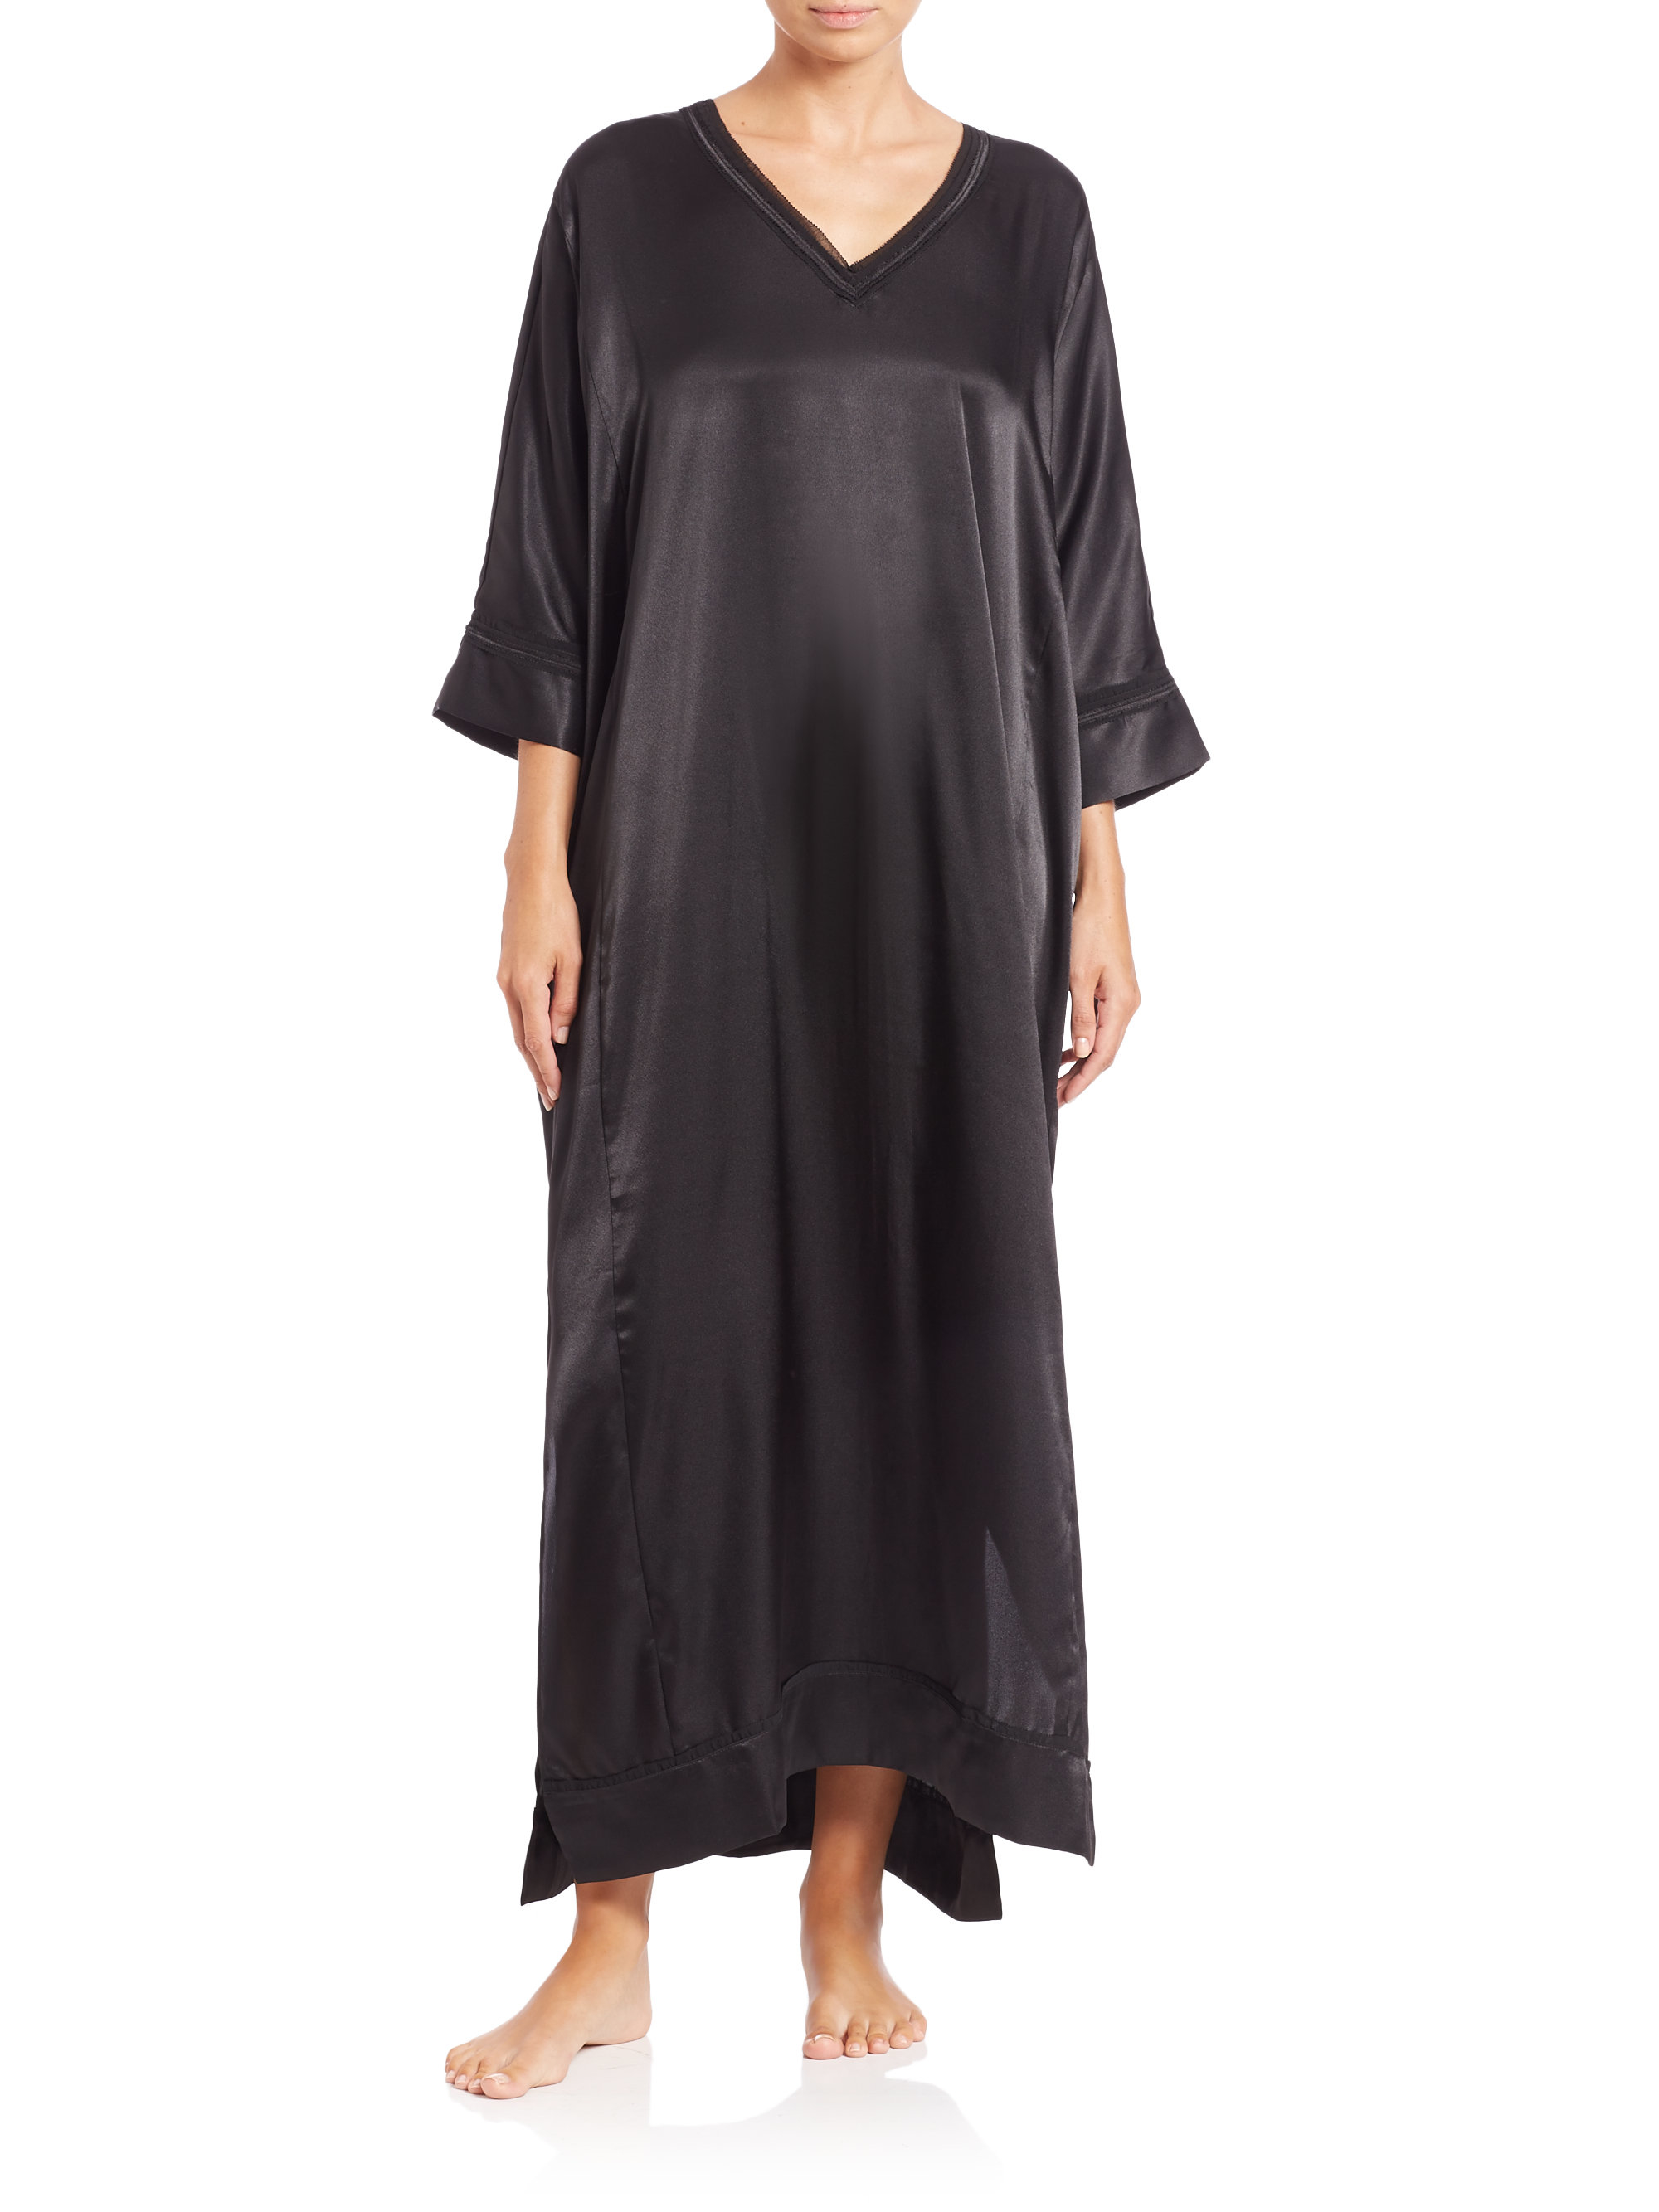 Lyst - Oscar de la renta Sheer-trim Sleep Gown in Black